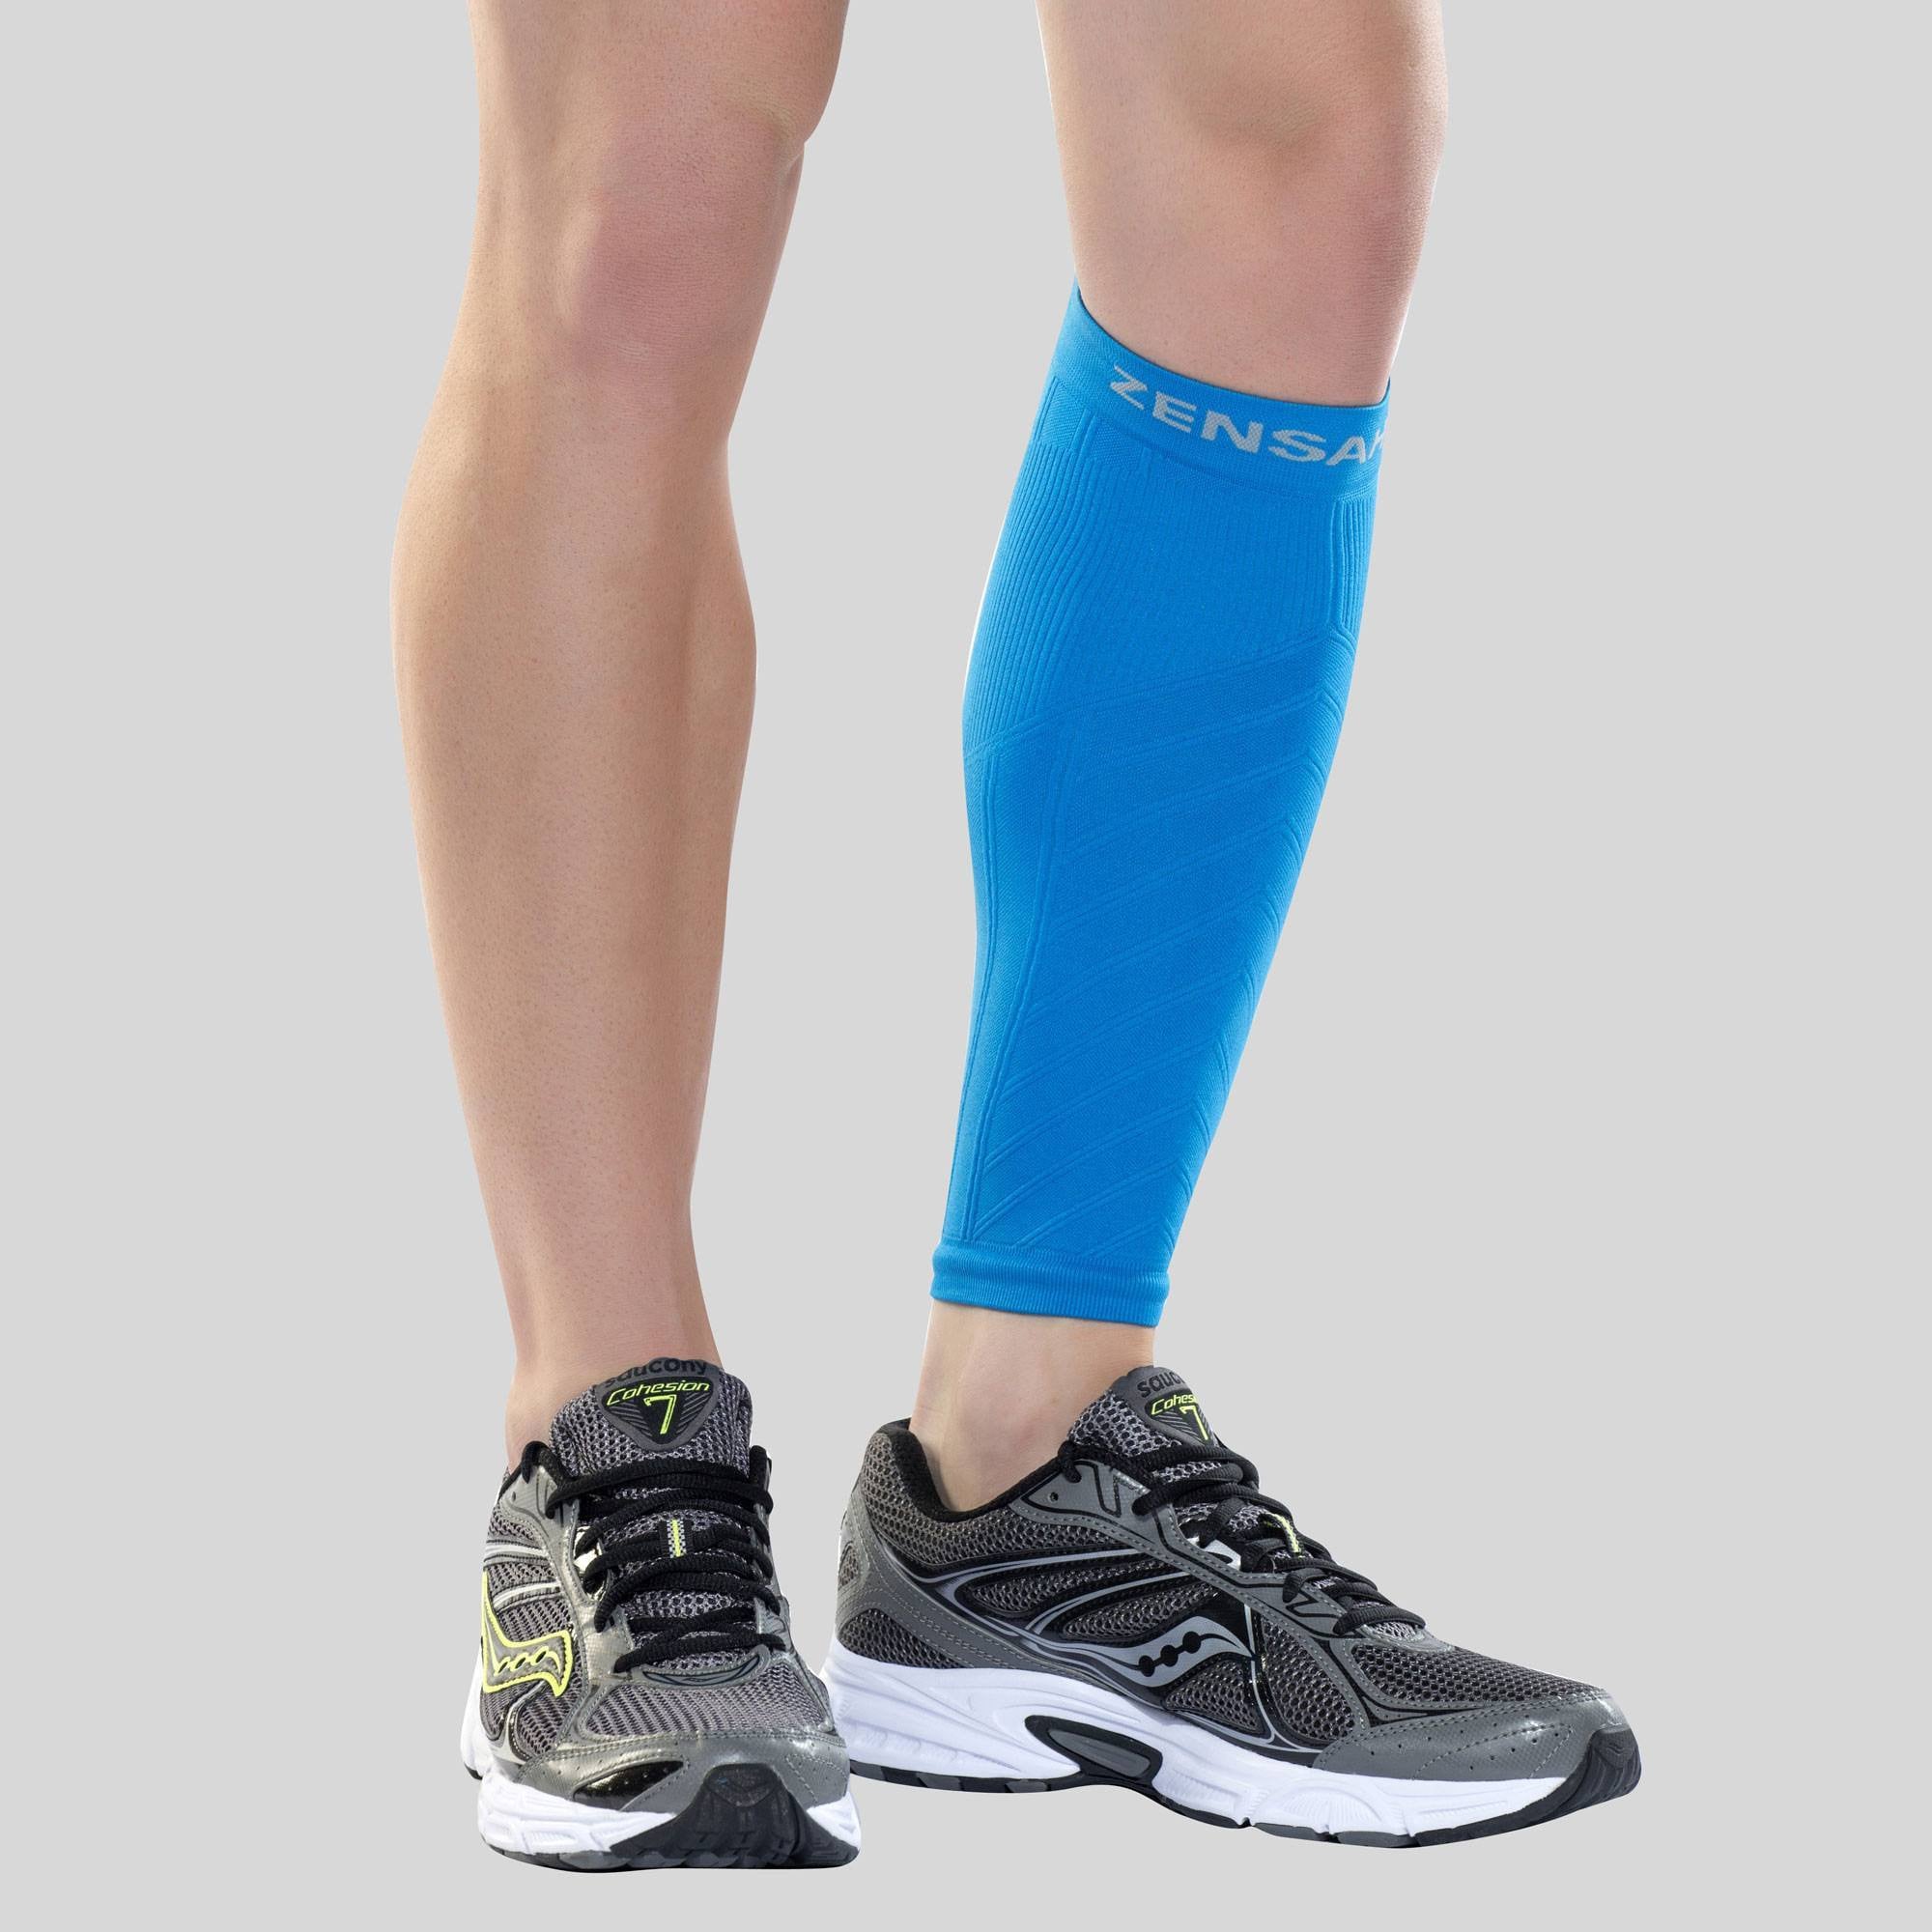 Zensah Ultra Compression Leg Sleeves Running, Shin Splint Relief